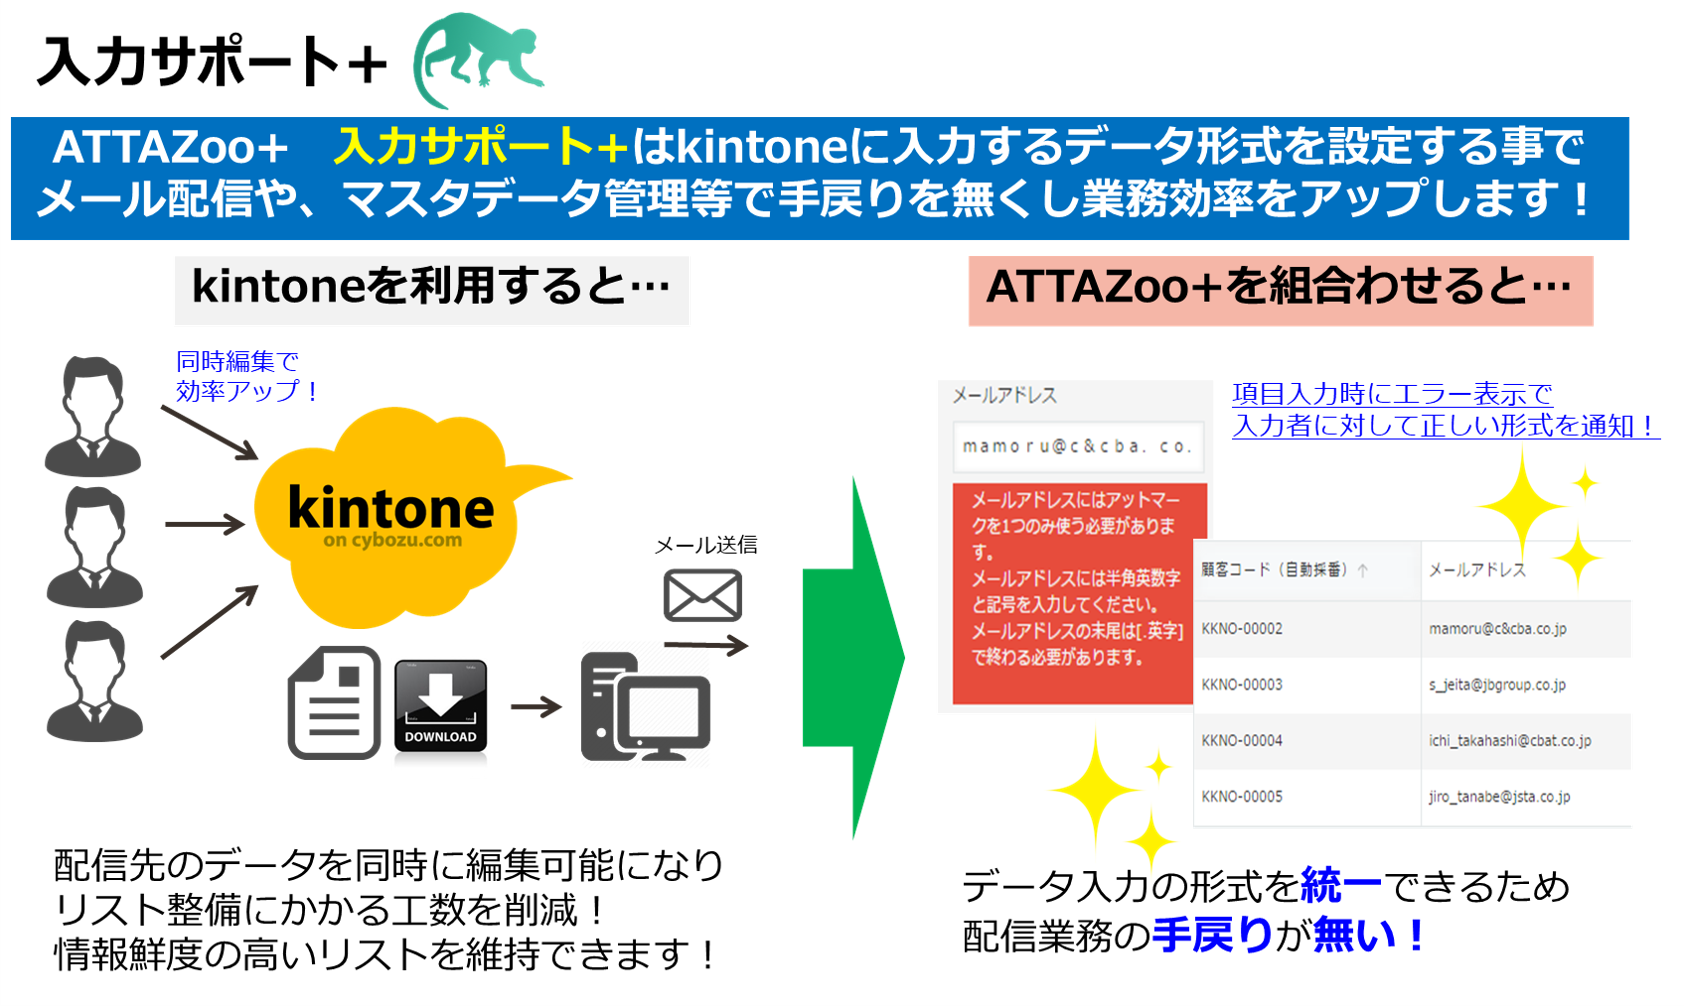 ATTAZoo+-image1-1.png